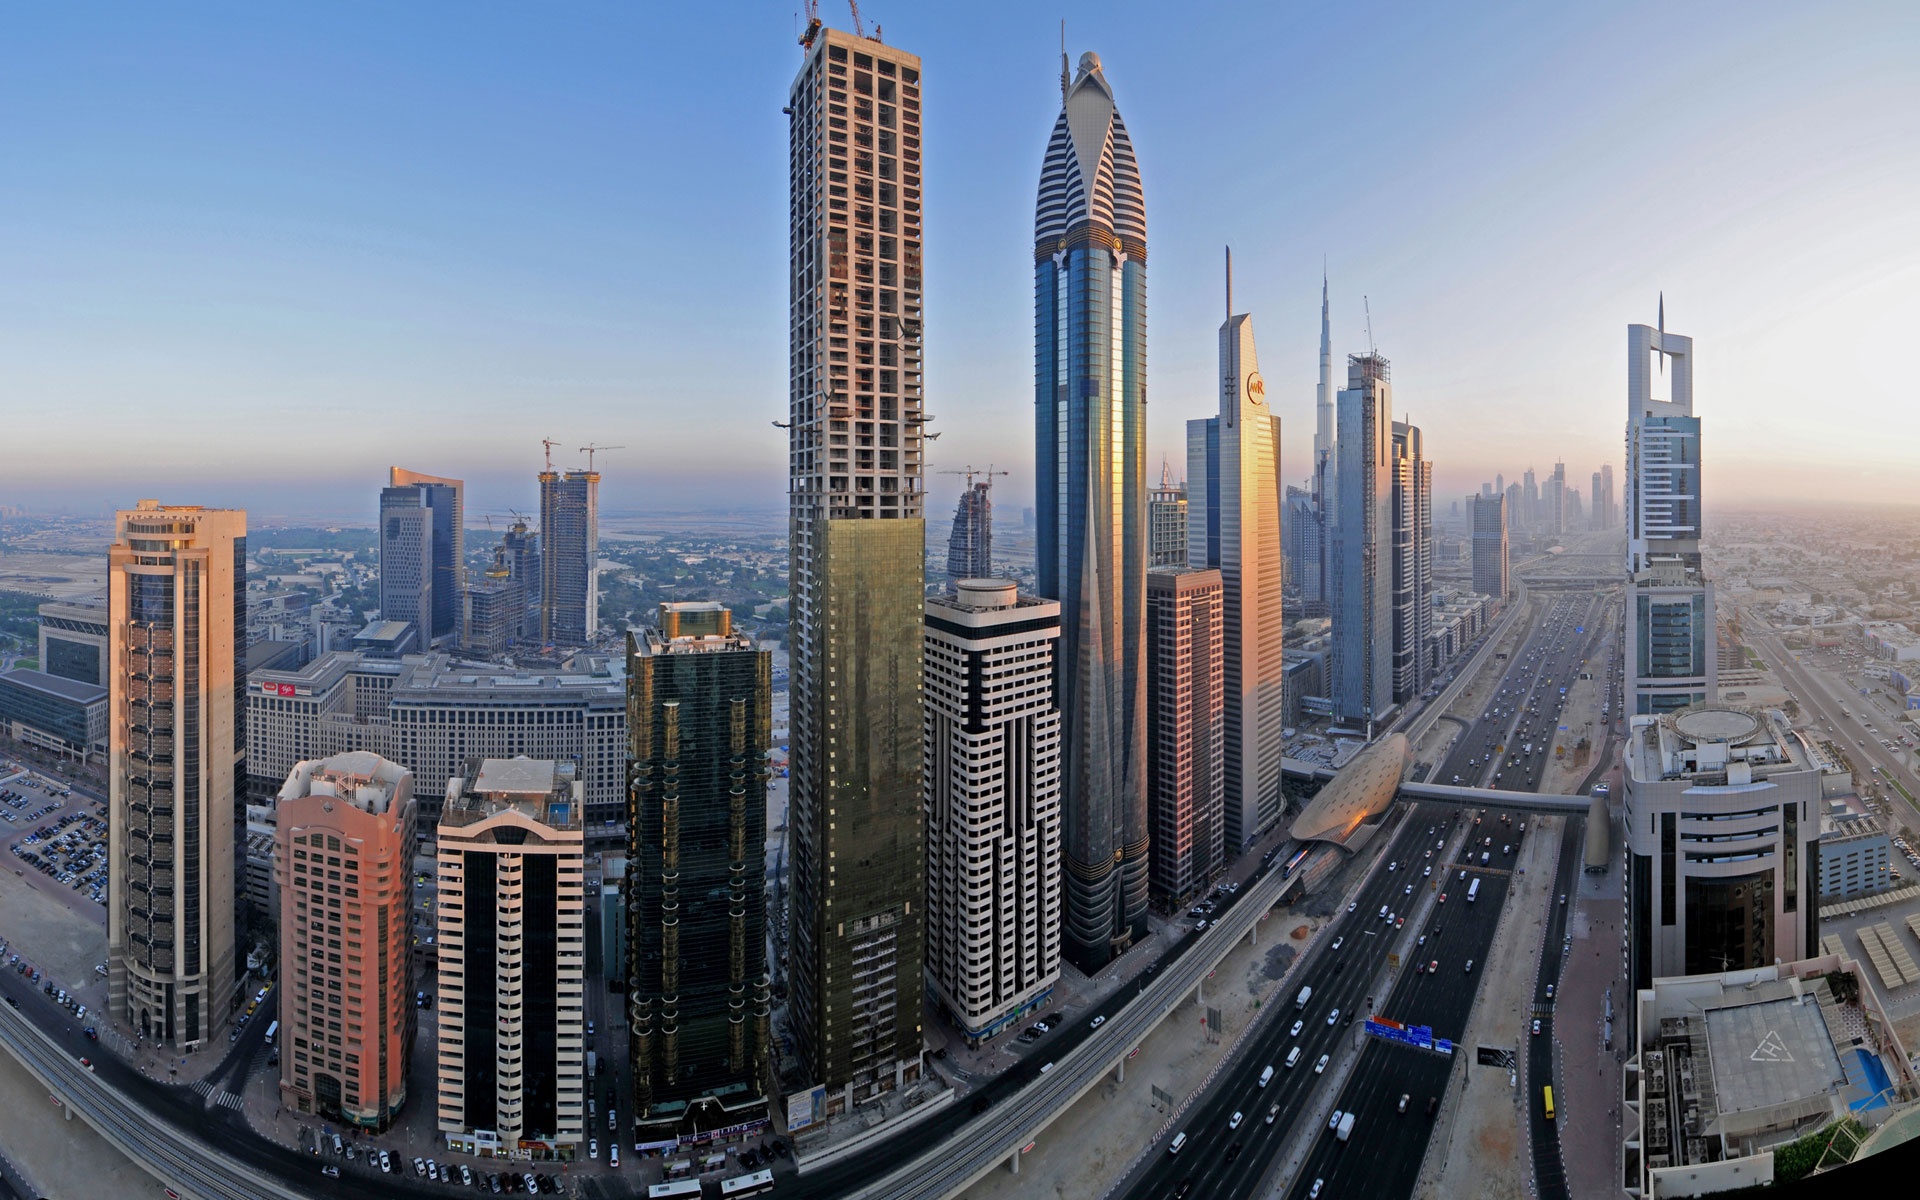 Dubai skyline at night with impressive man-made structures illuminated.